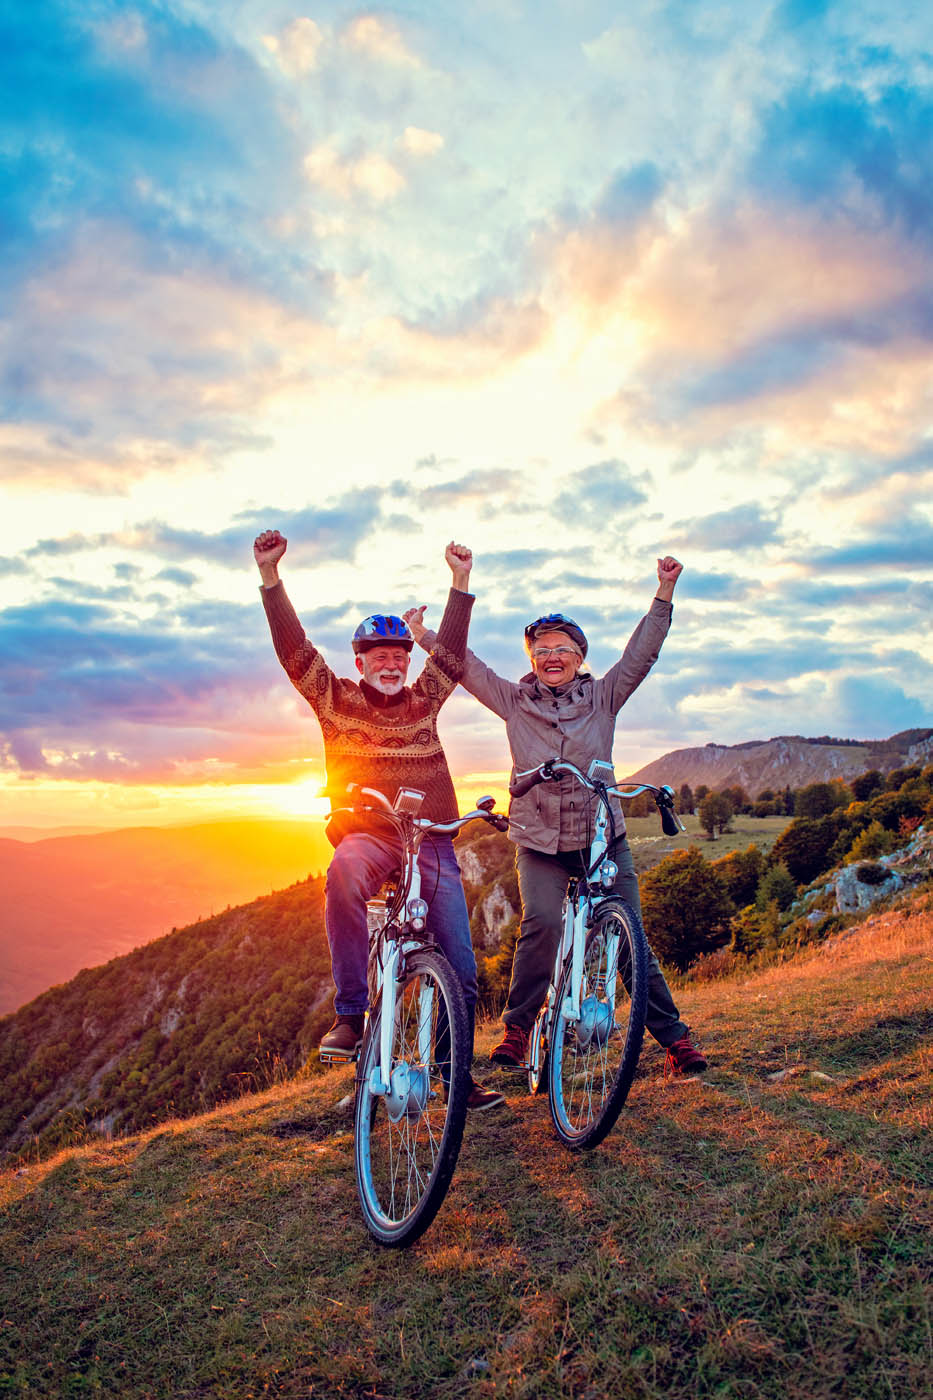 A senior couple biking pain-free into the sunset thanks to Light Lounge's knee pain treatment.